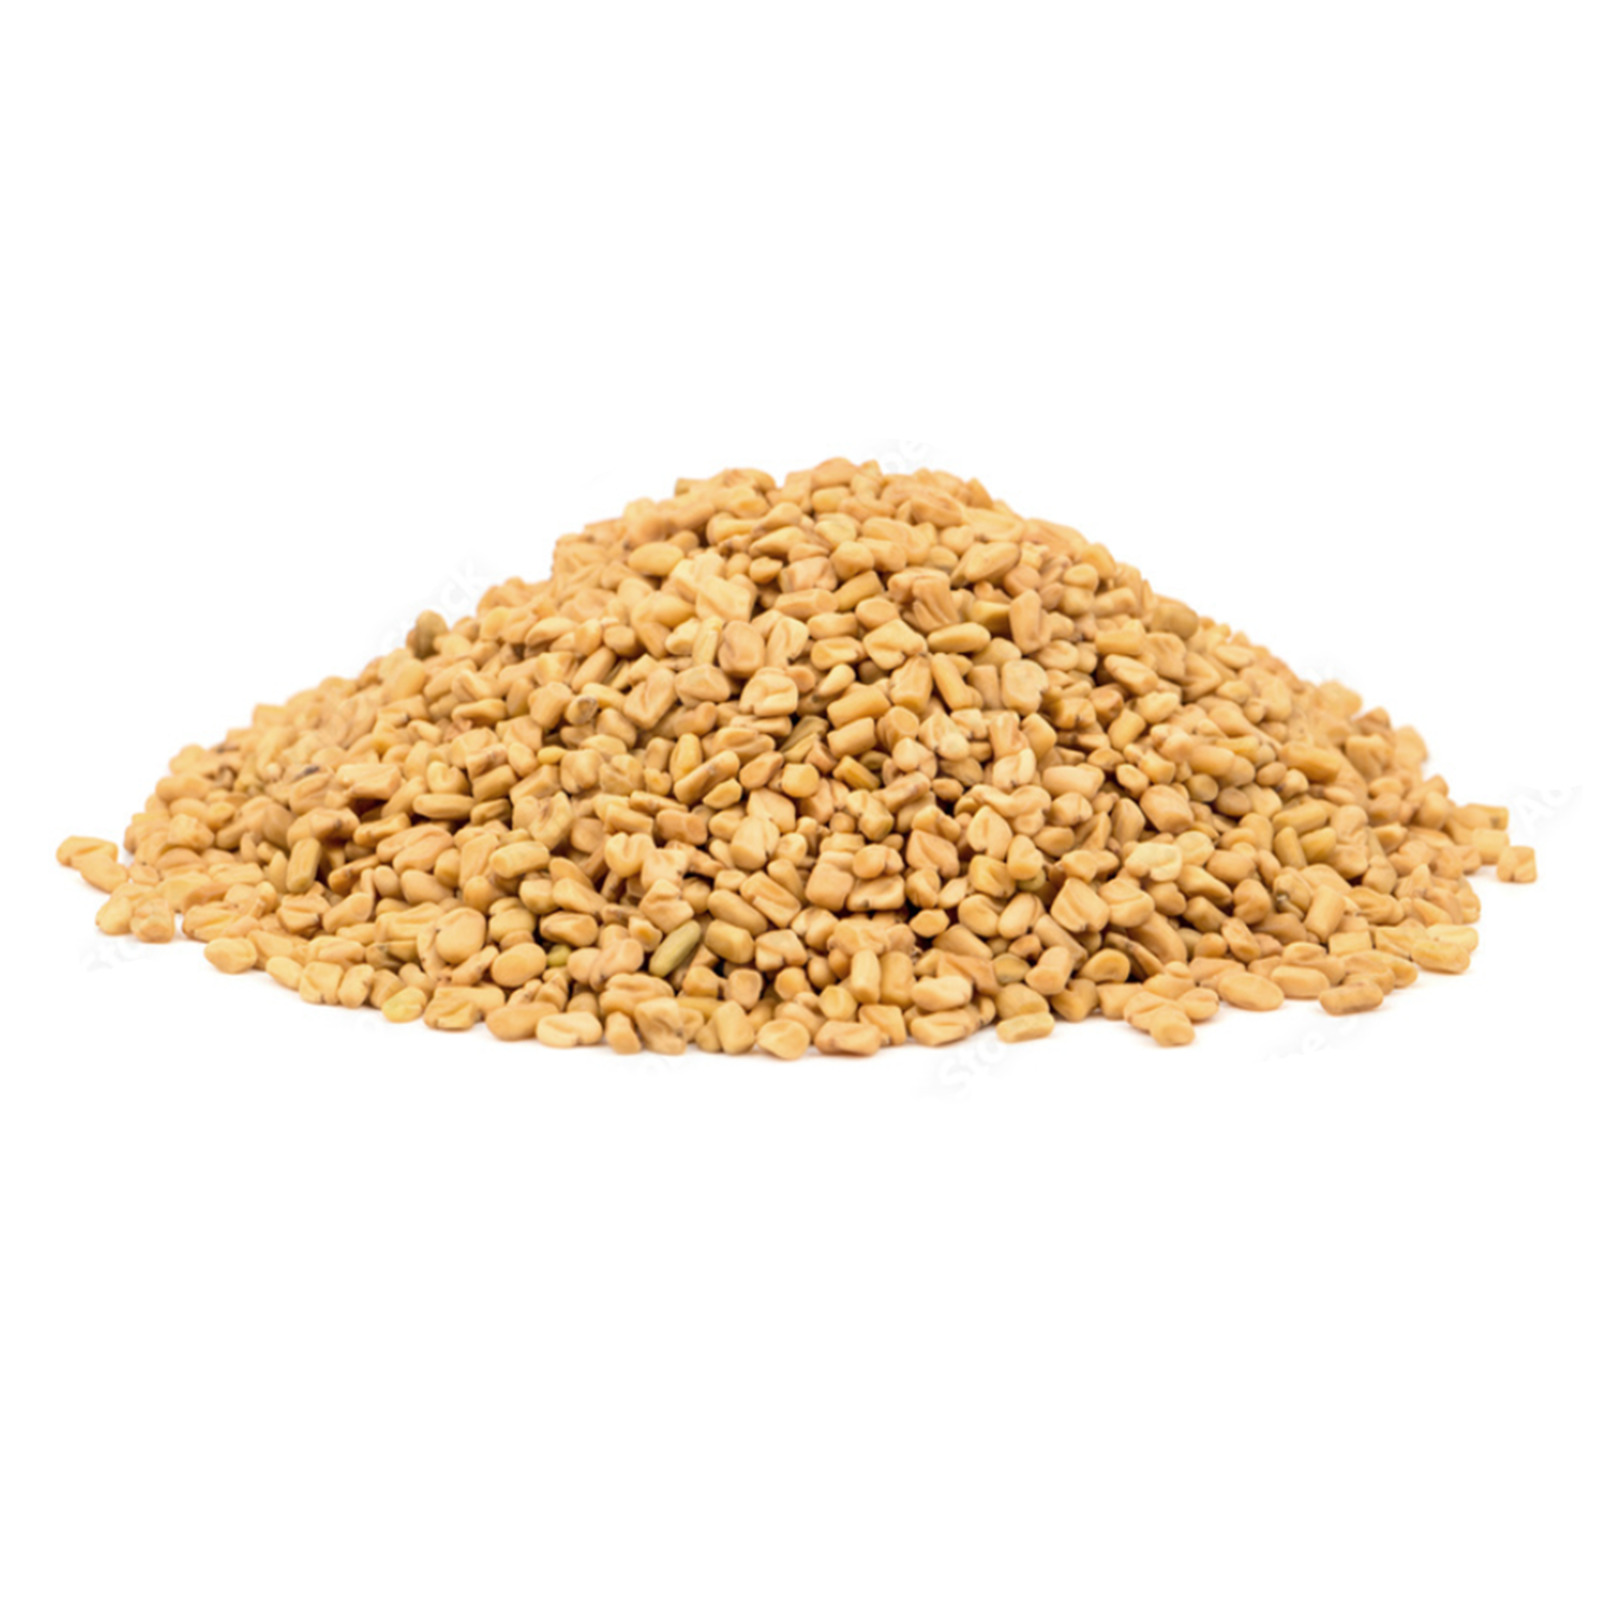 Fenugreek Seeds (1 oz) Ritual Herb Package Dried